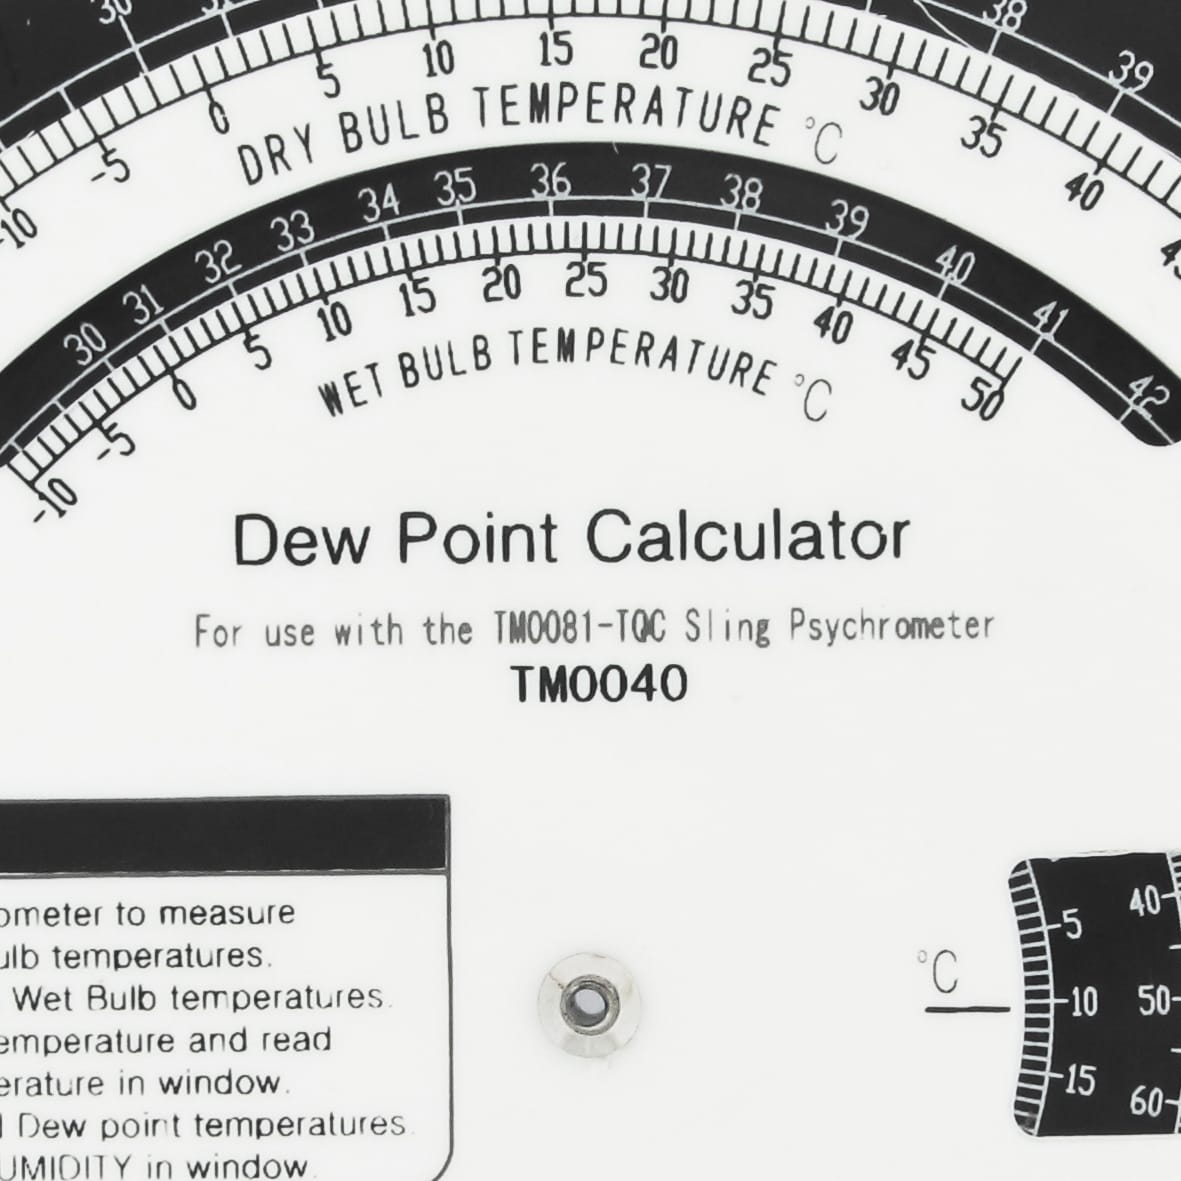 kingspan dew point calculator